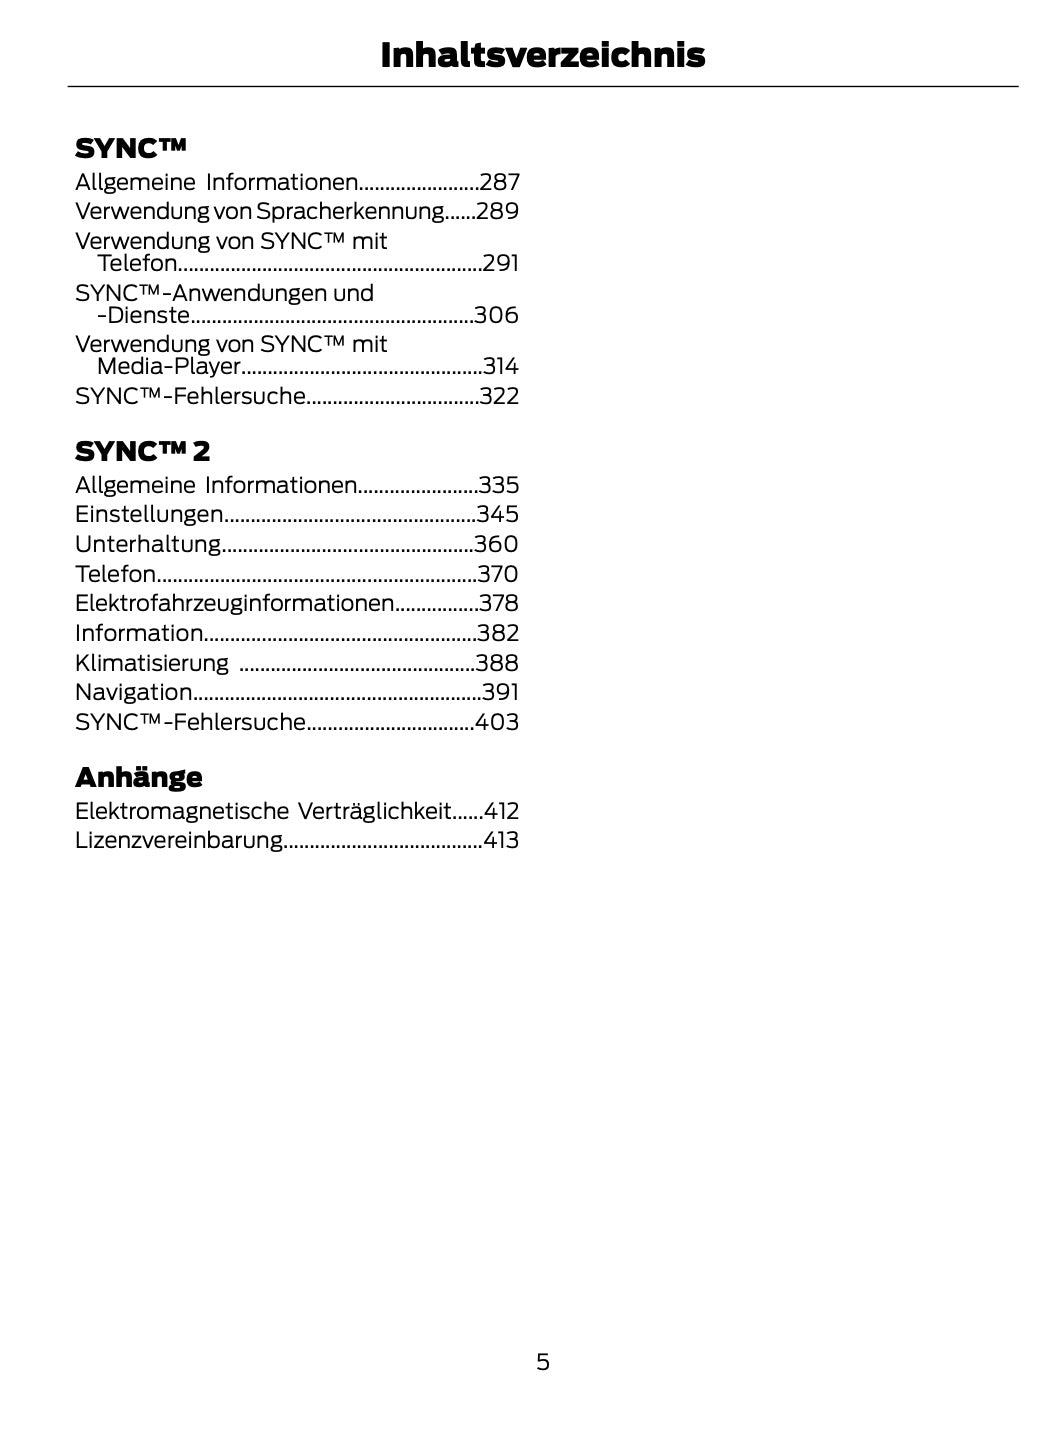 2014-2015 Ford Mondeo Hybrid Owner's Manual | German